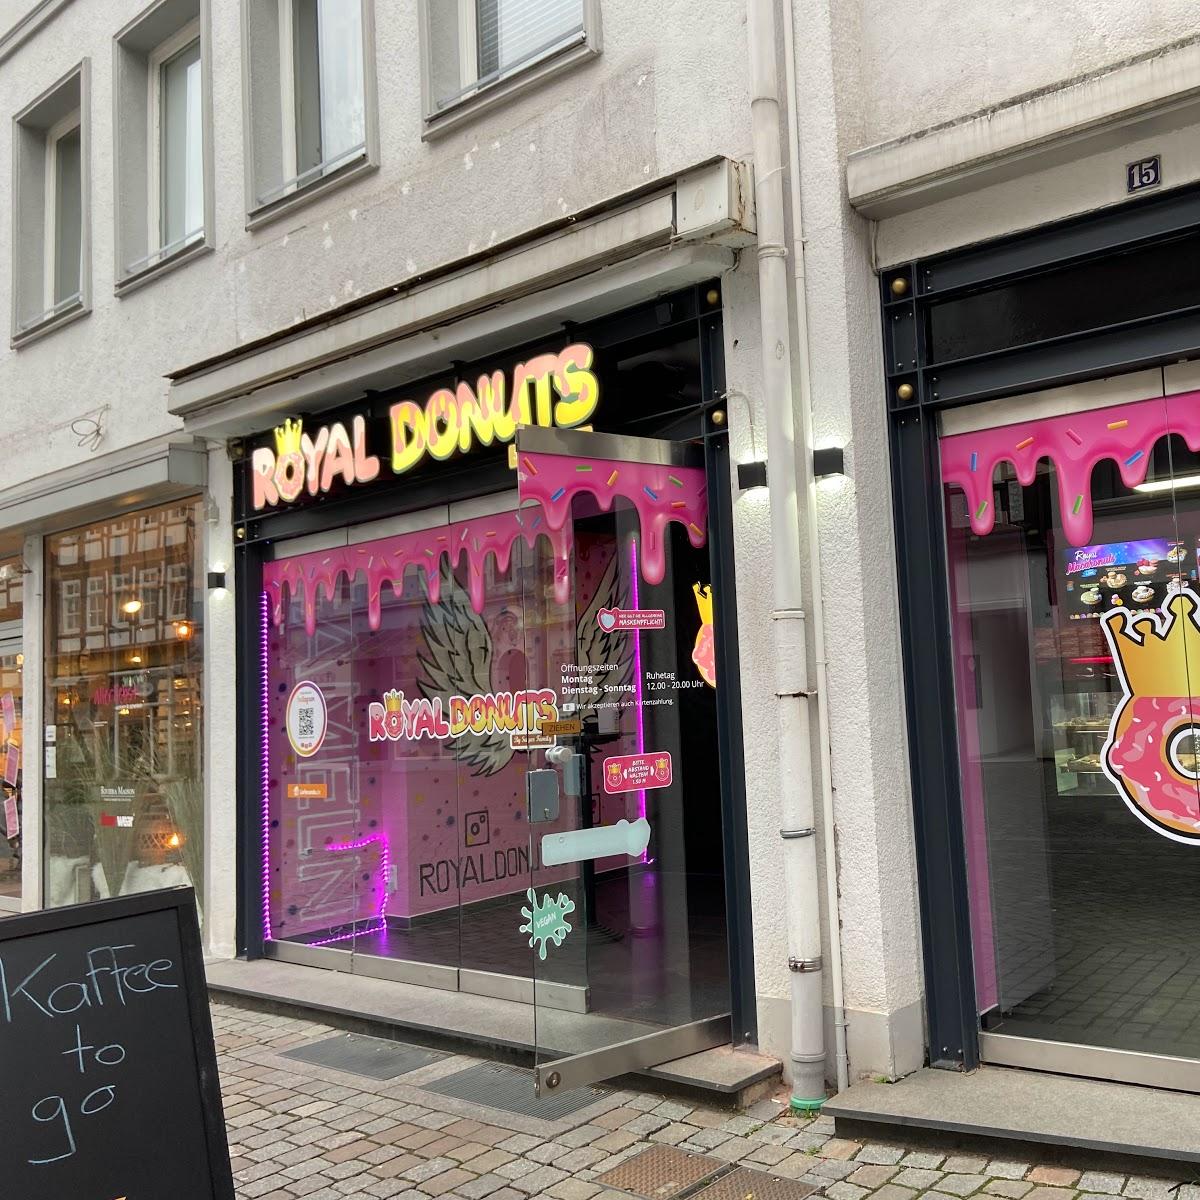 Restaurant "Royal Donuts" in Hameln